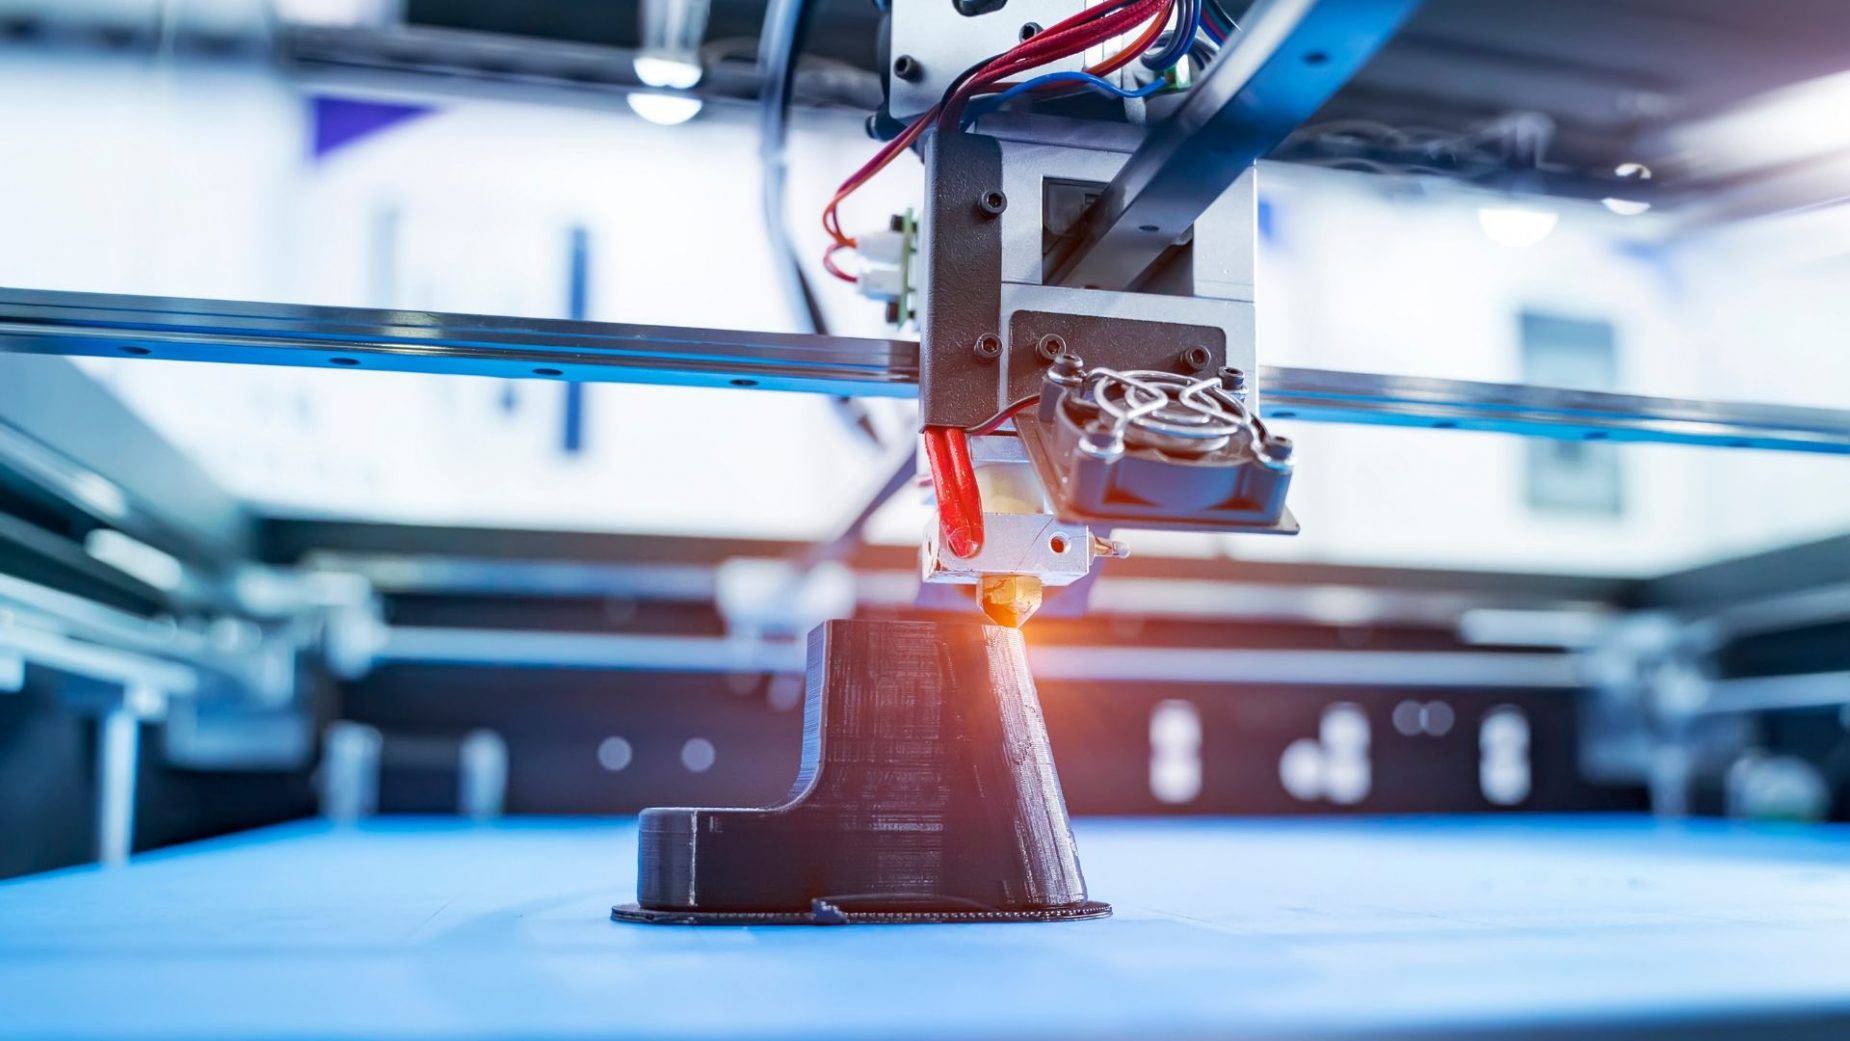 3D Printing Services Market